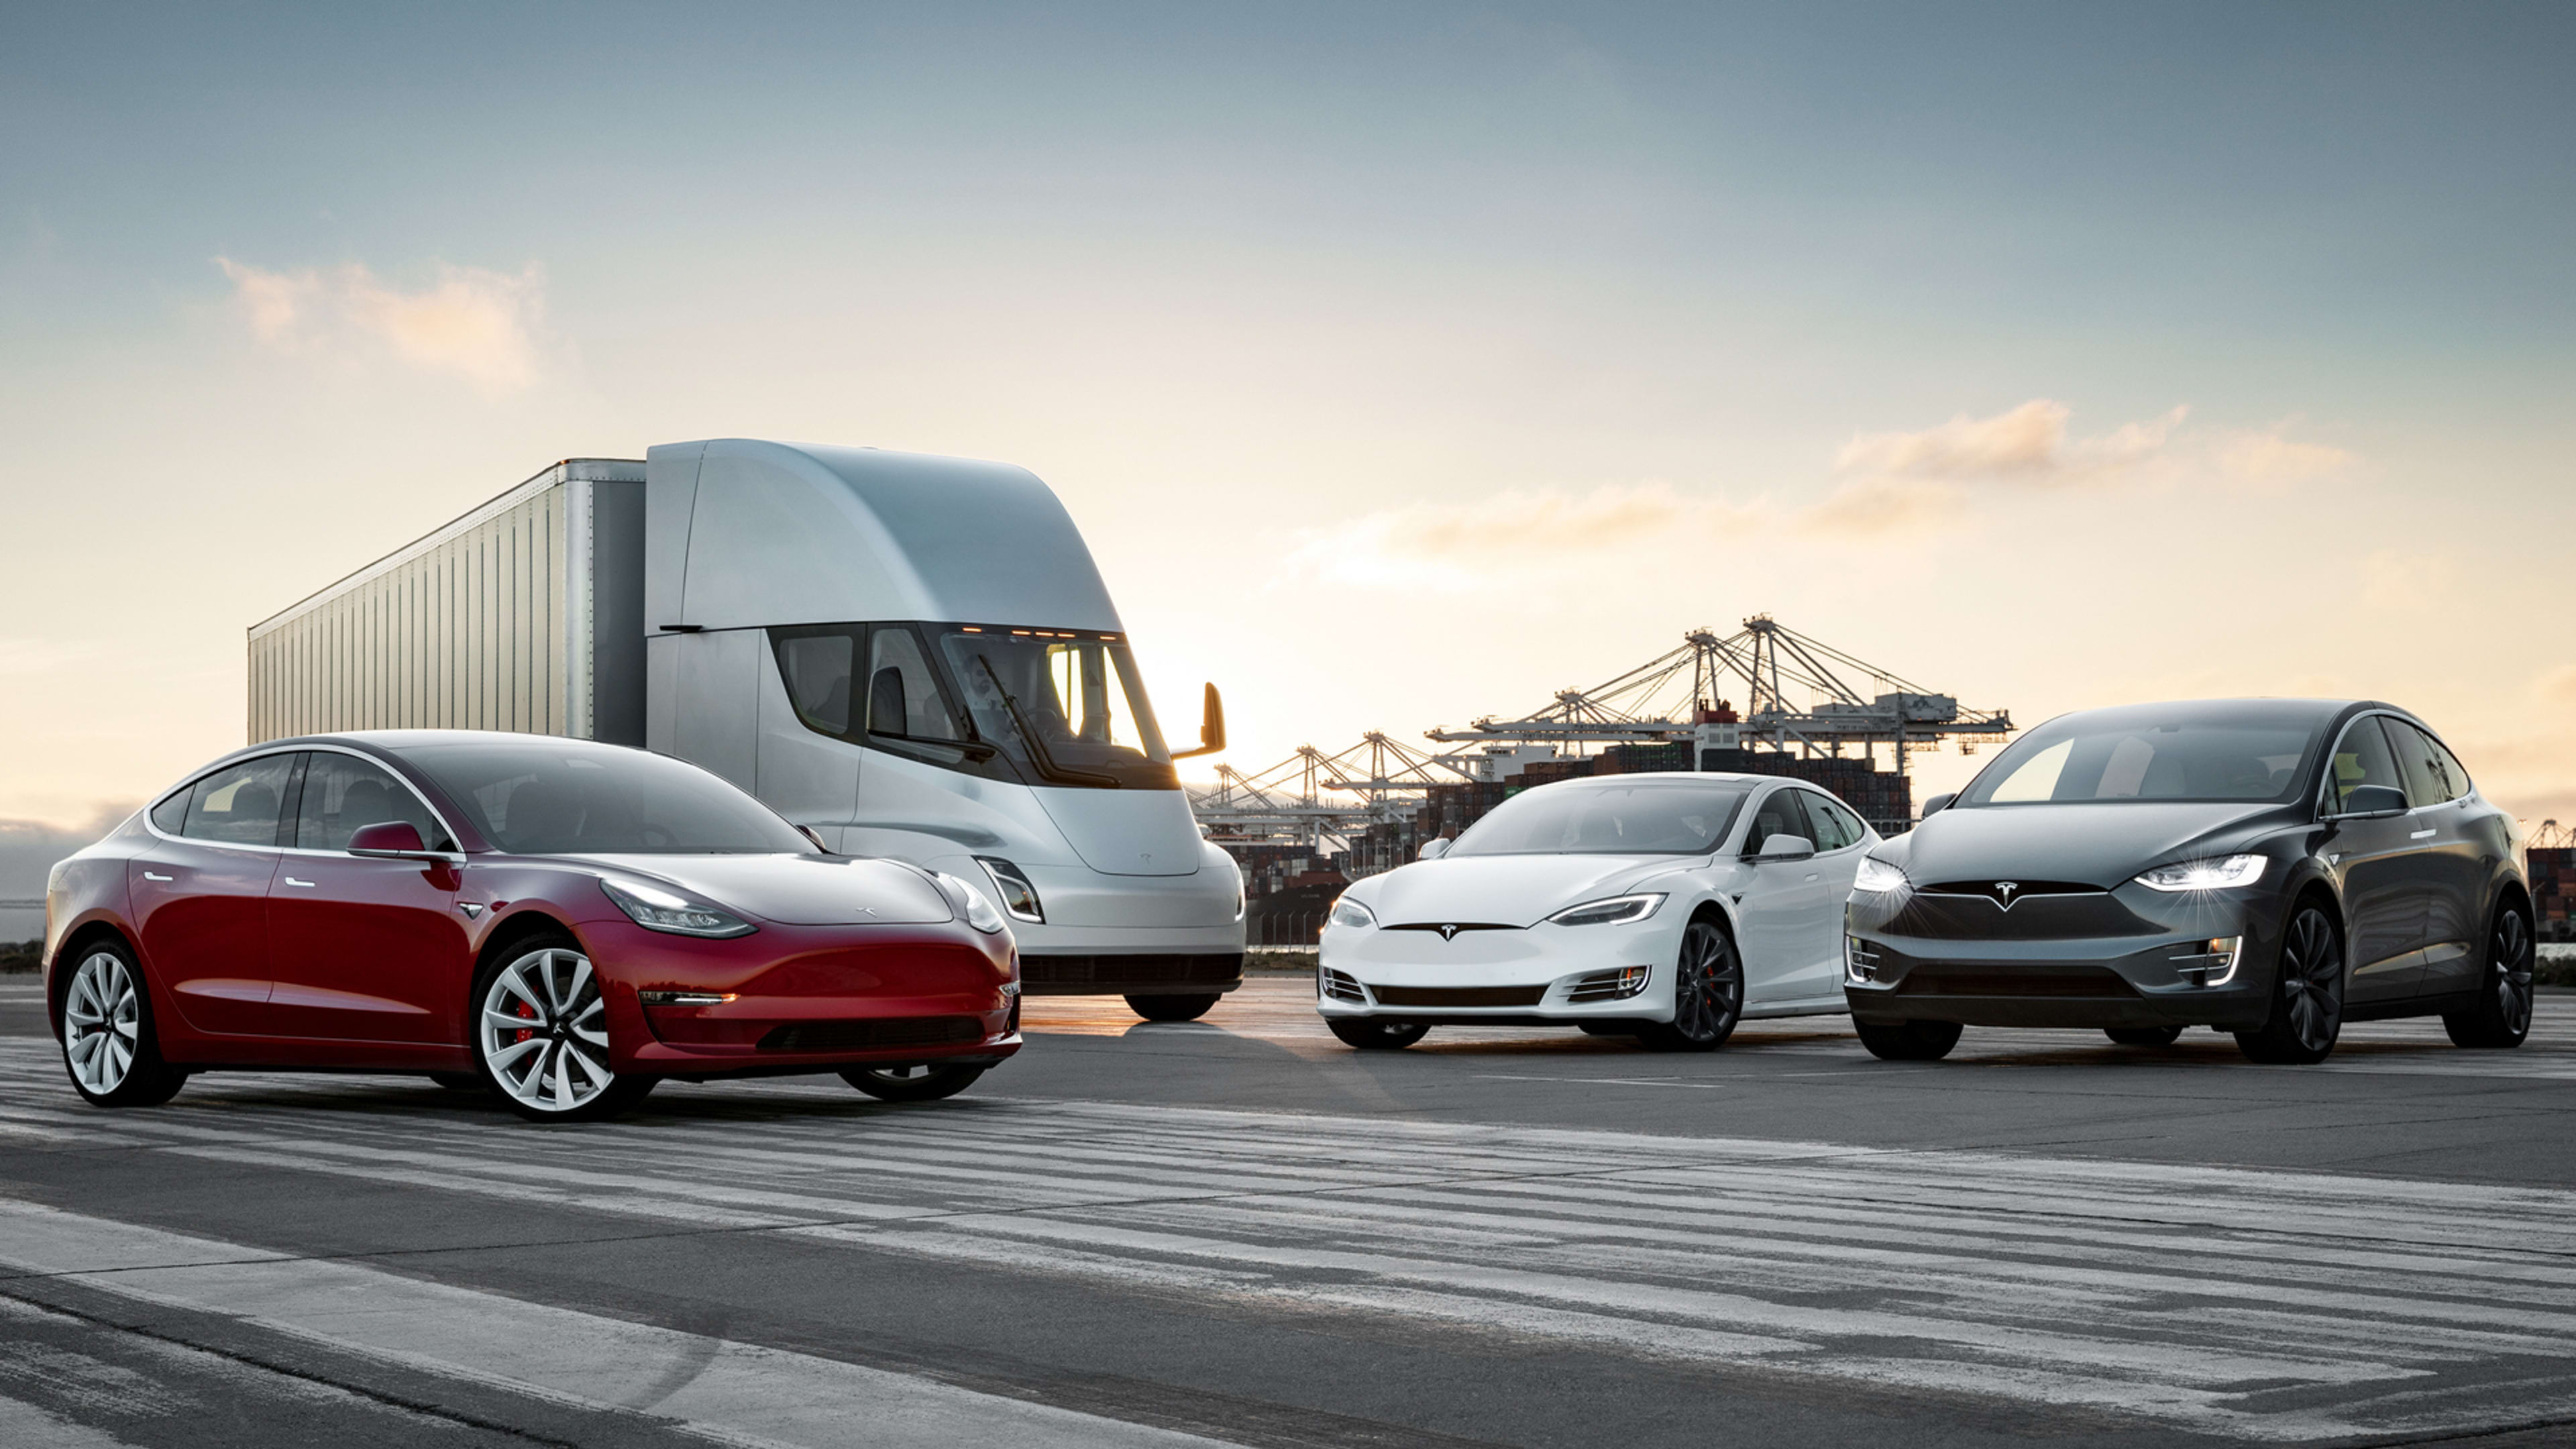 Tesla Cybertruck: How to watch Elon Musk unveil the electric pickup truck online